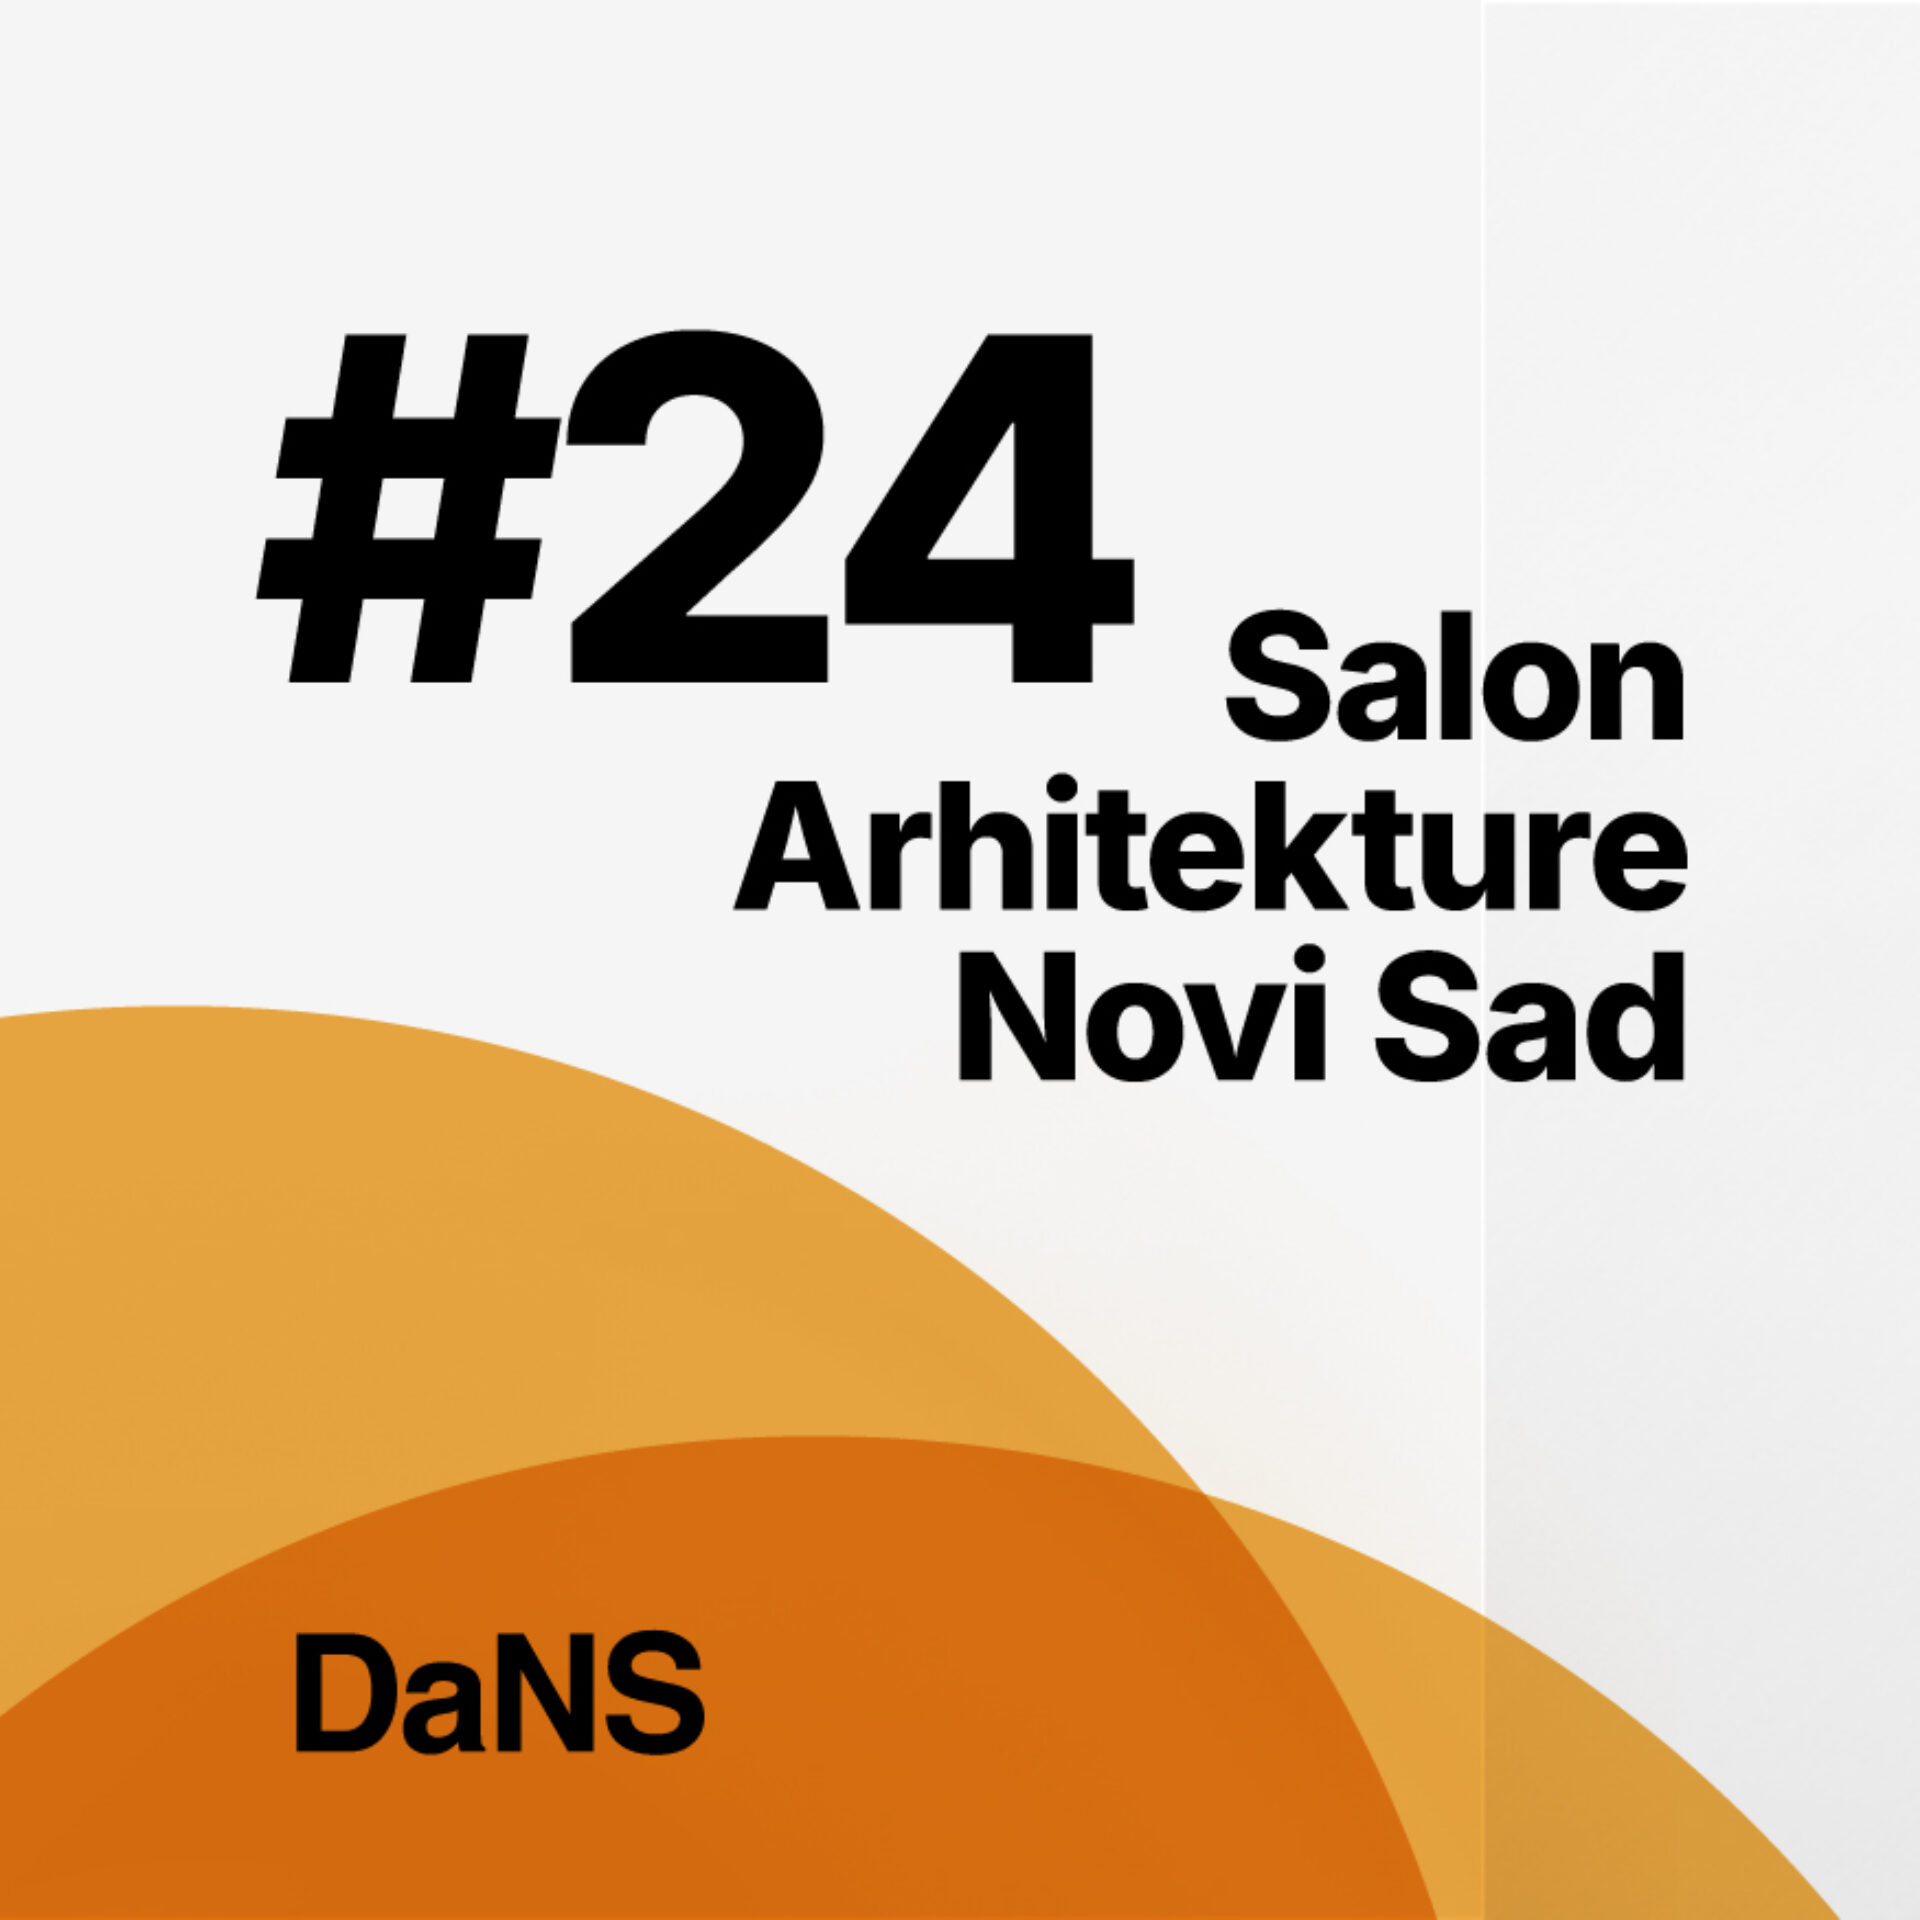 24 Salon arhitekture Novi Sad - DaNS podaljšuje rok za prijave